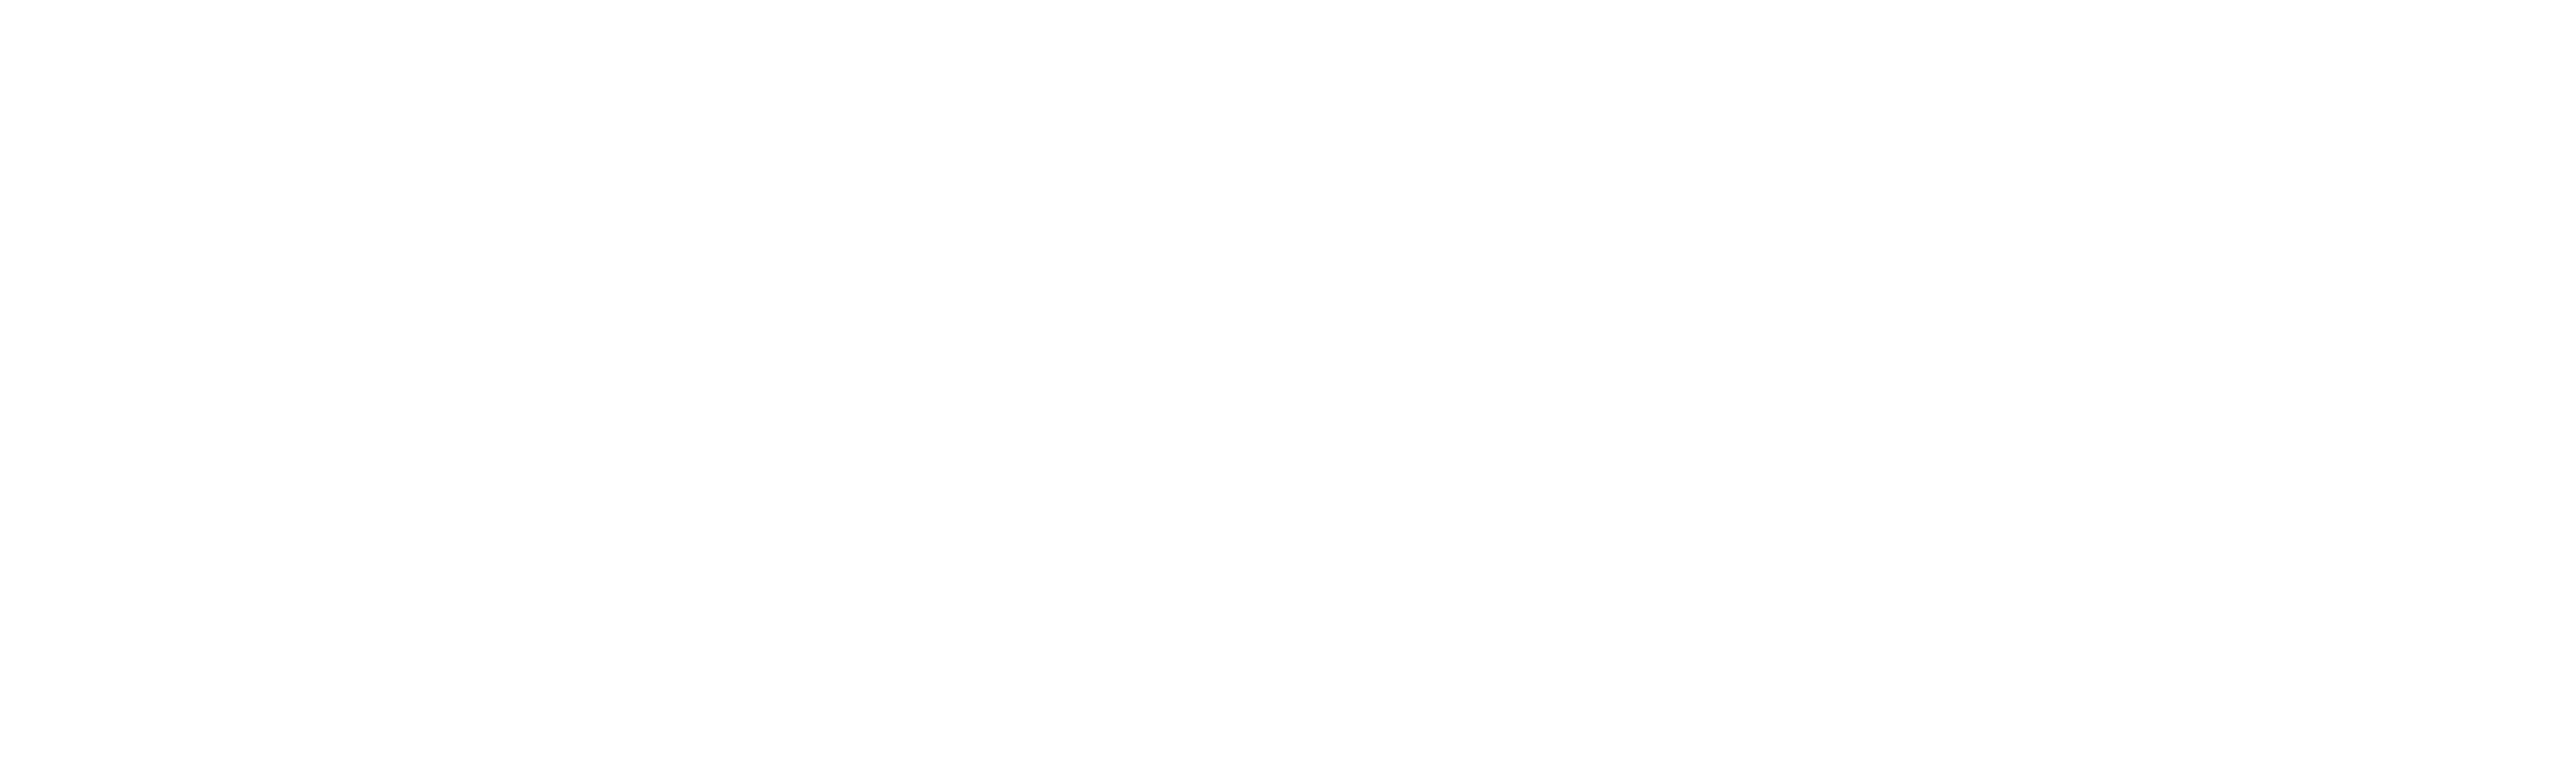 Mr Bates vs The Post Office logo